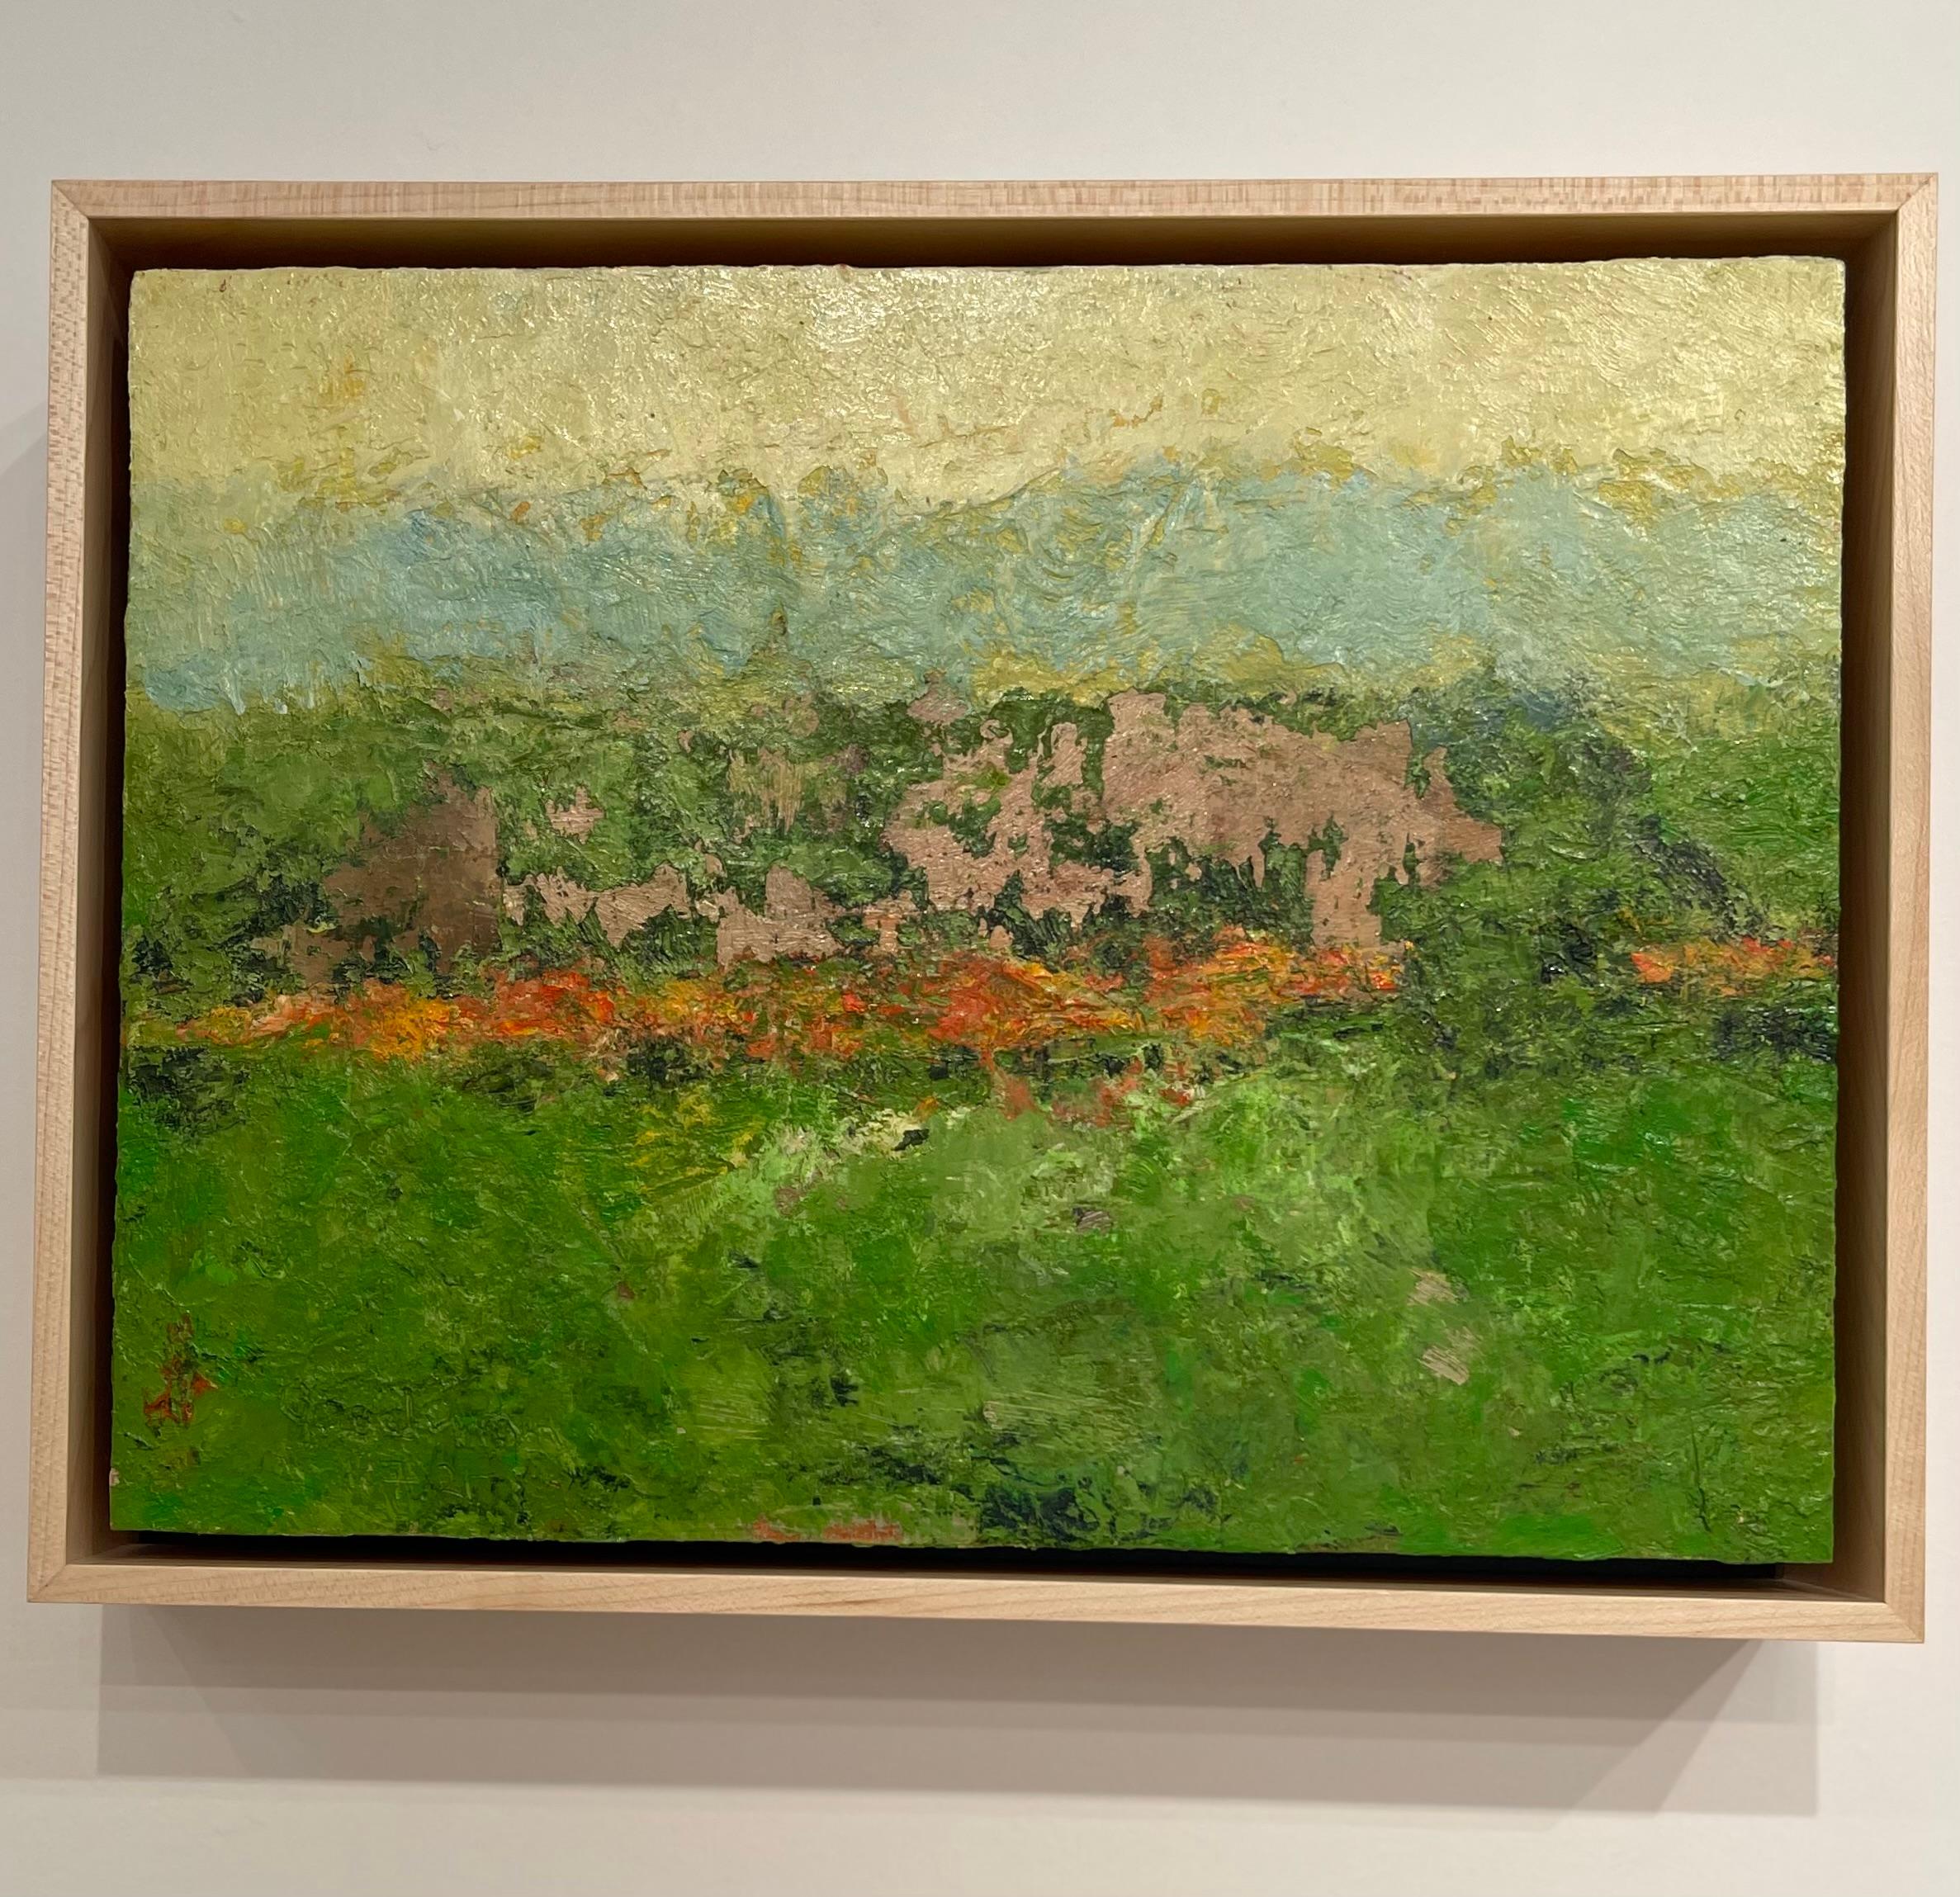 Landscape no. 1, 2021 - Painting by John Goodman